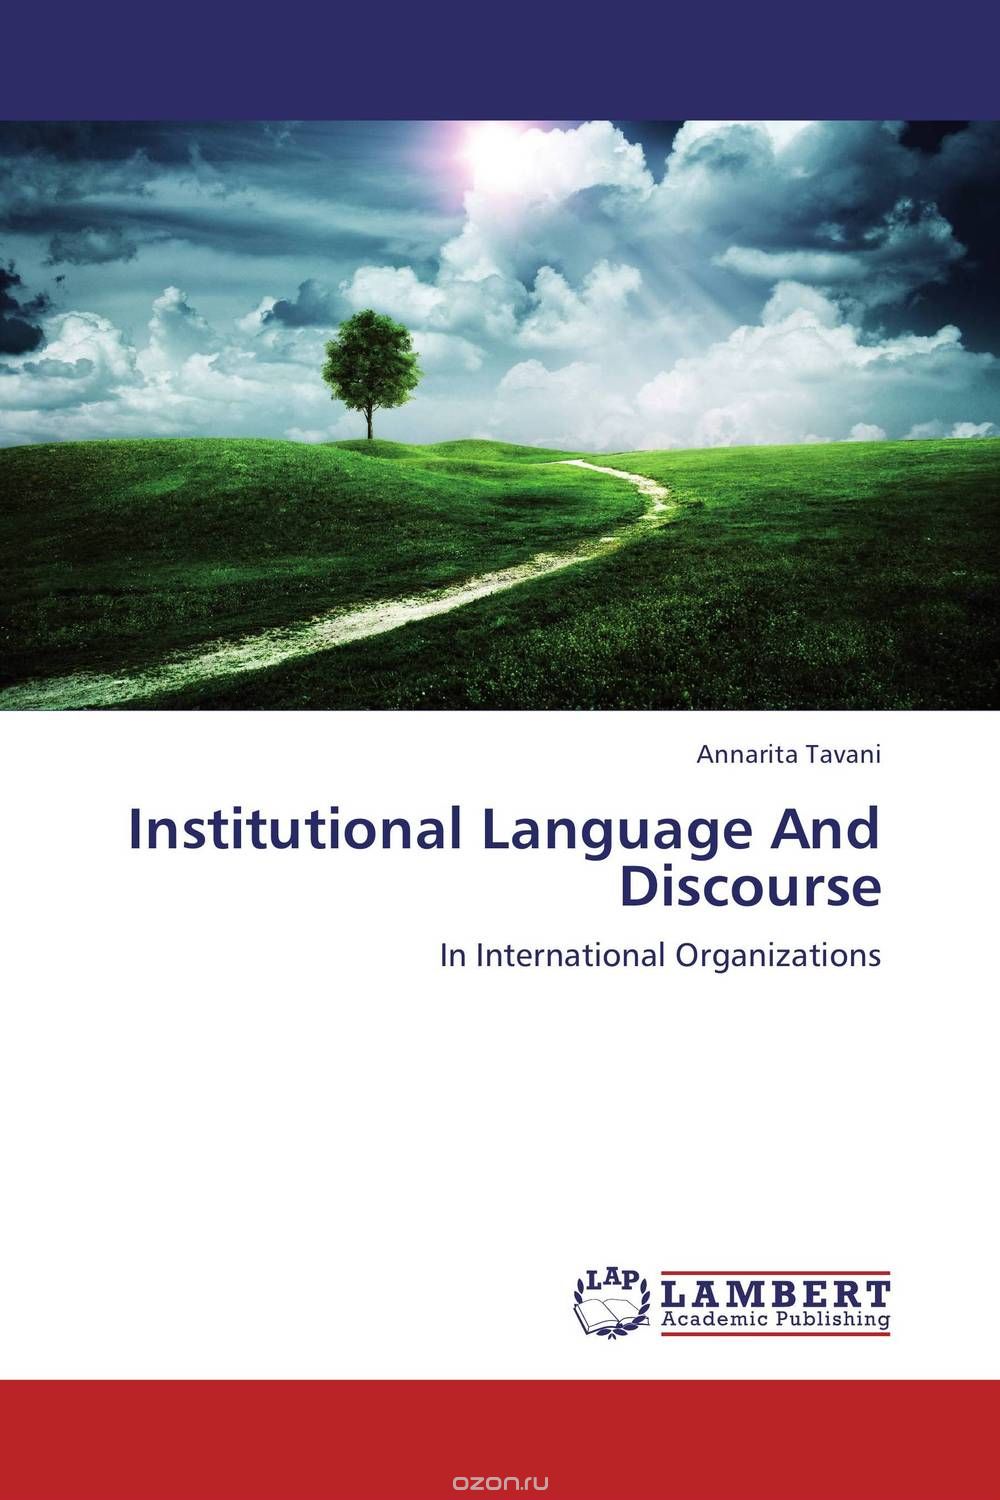 Скачать книгу "Institutional Language And Discourse"